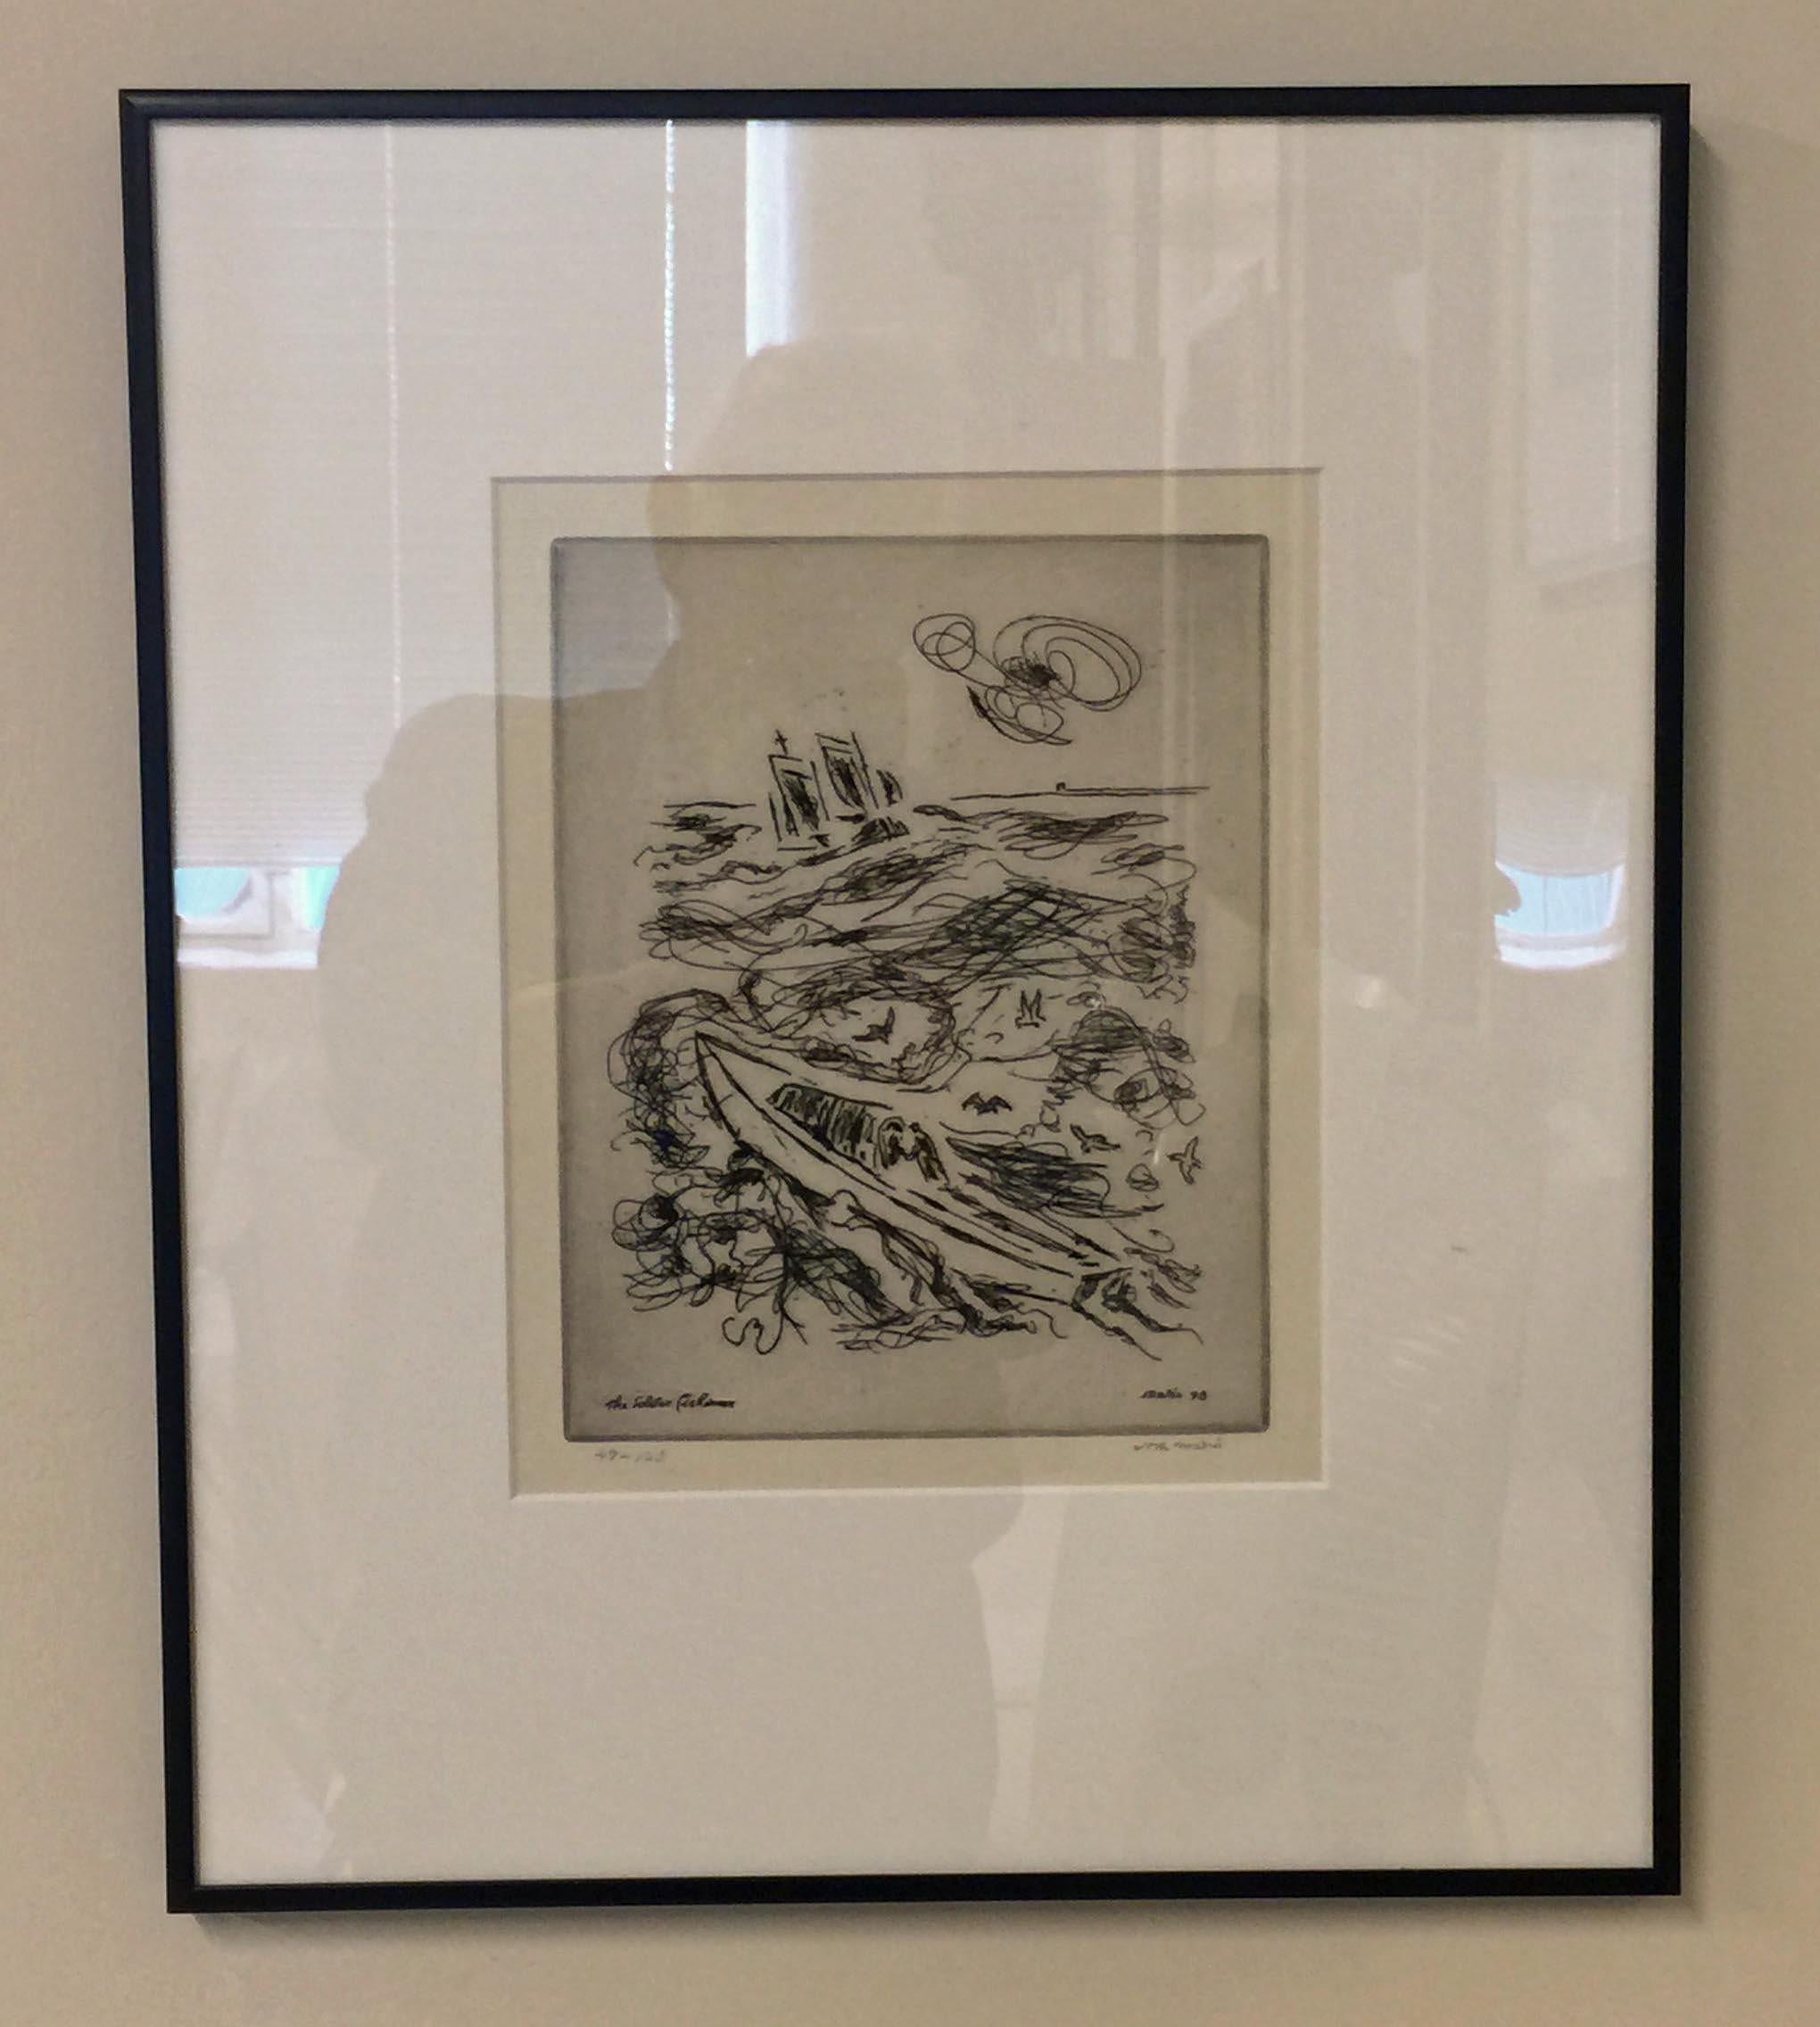 THE LOBSTER FISHERMAN - Print by John Marin